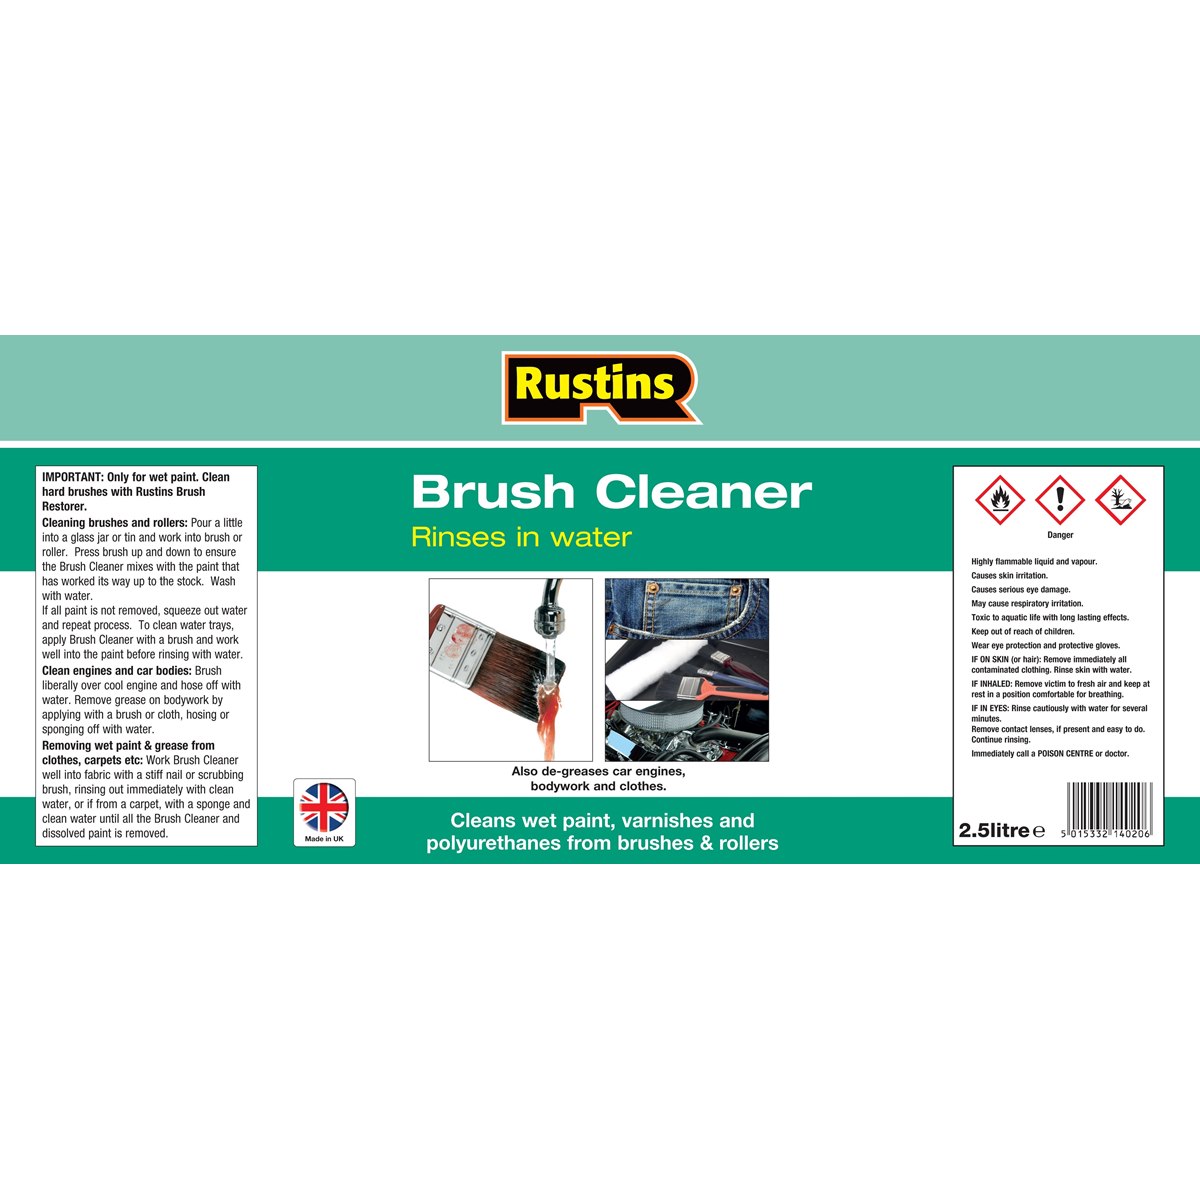 Where to Buy Rustins Brush Cleaner